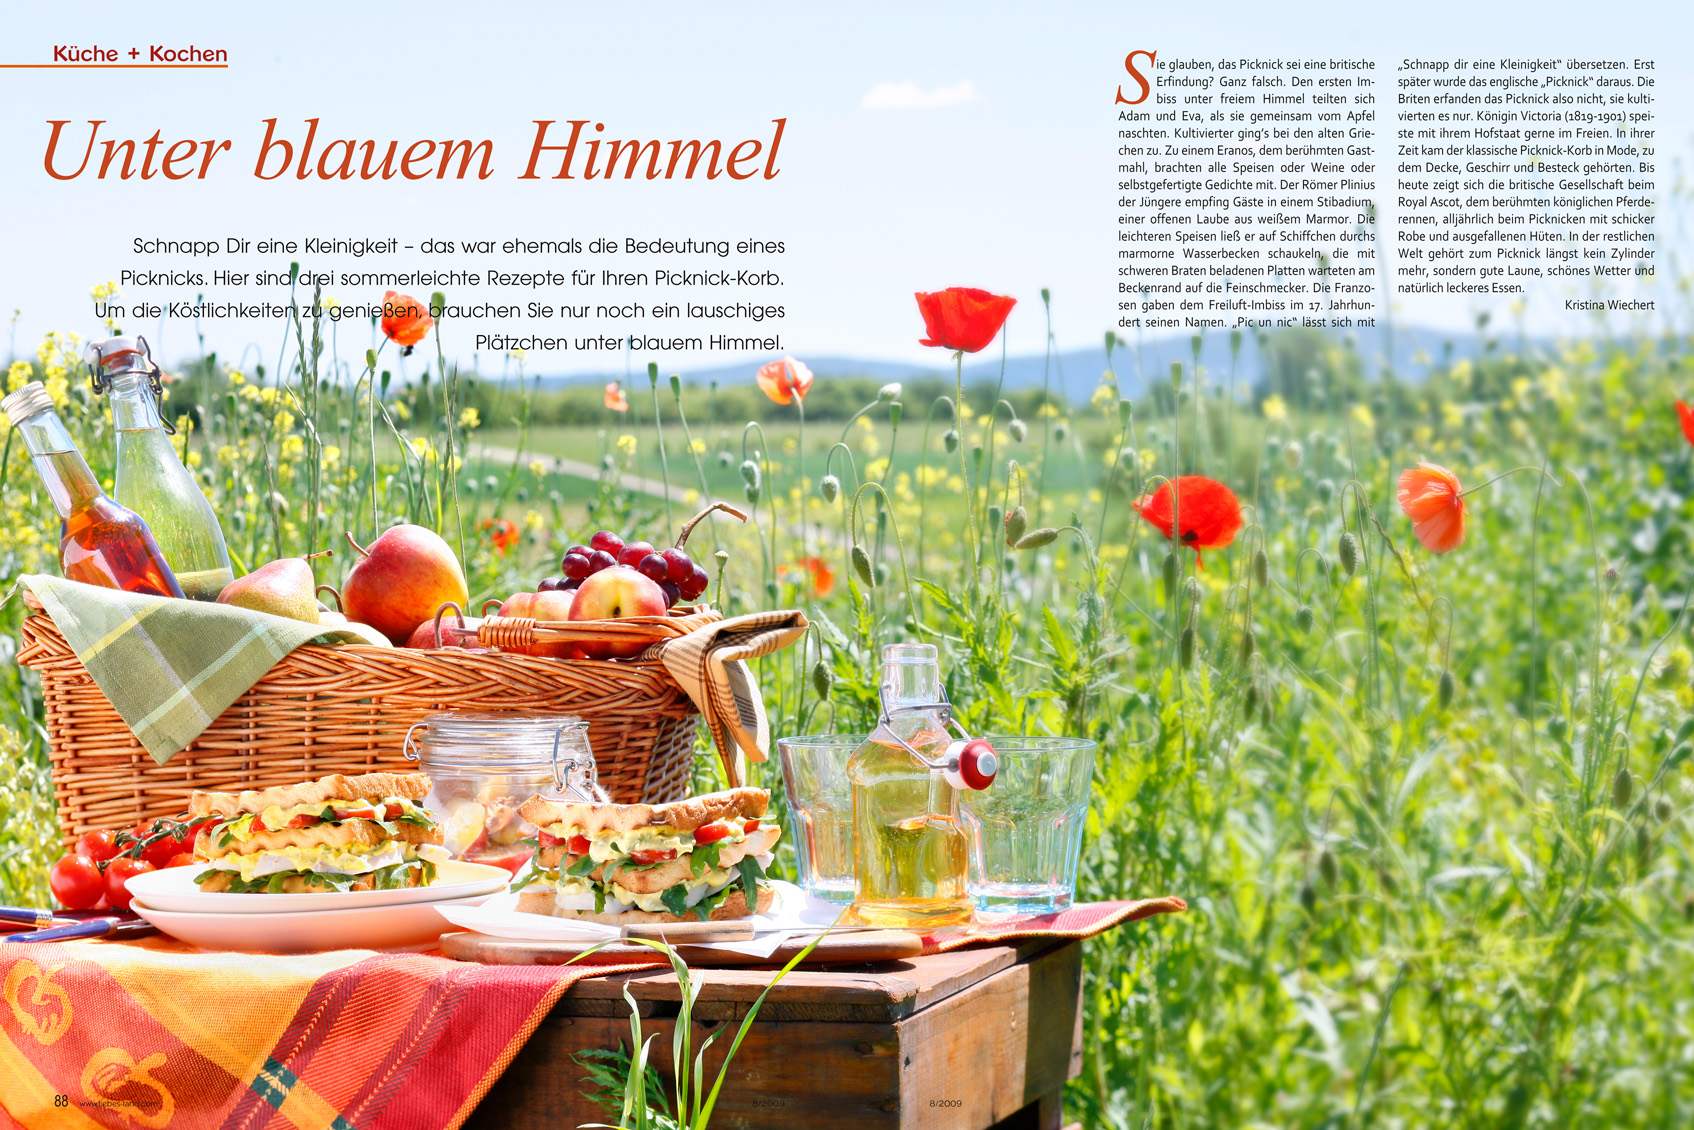 editorial - aufmacher - picknick